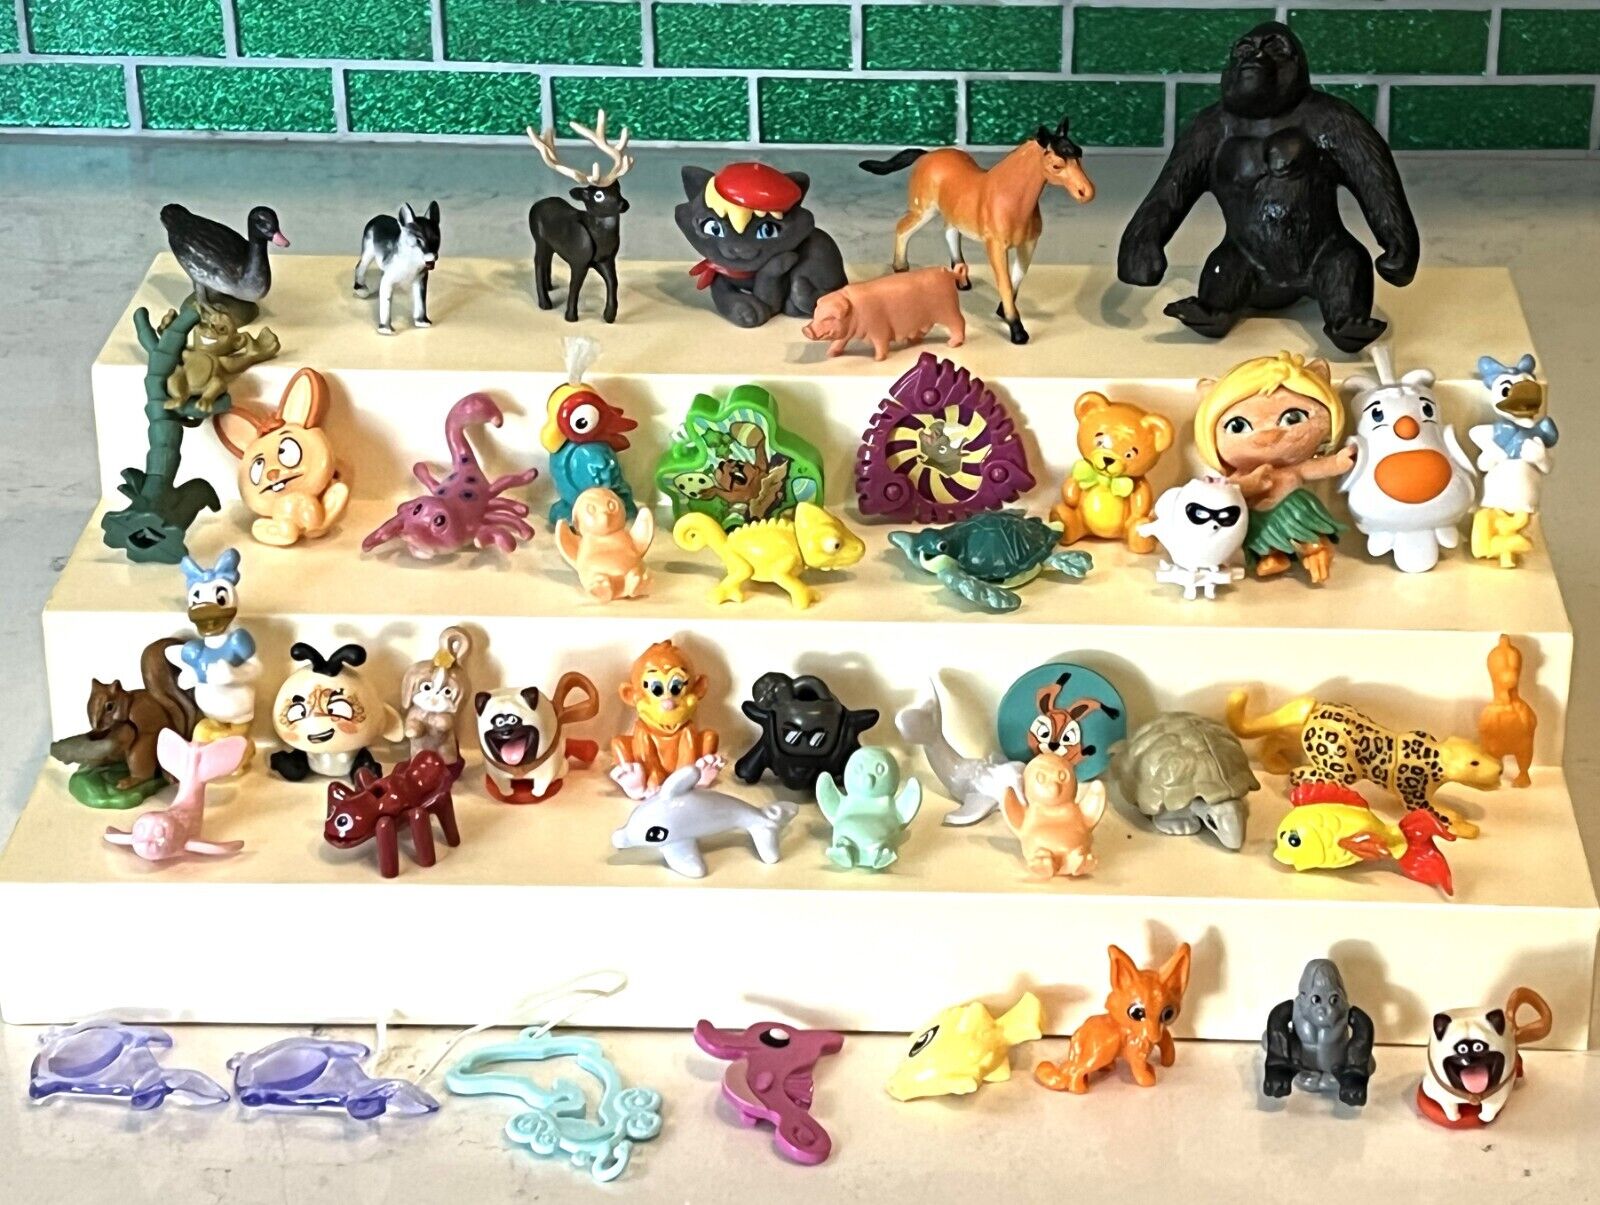 47 Animal Toy Plastic Figurines, Medalions ets.: Farm, Wild, Cartoon Characters